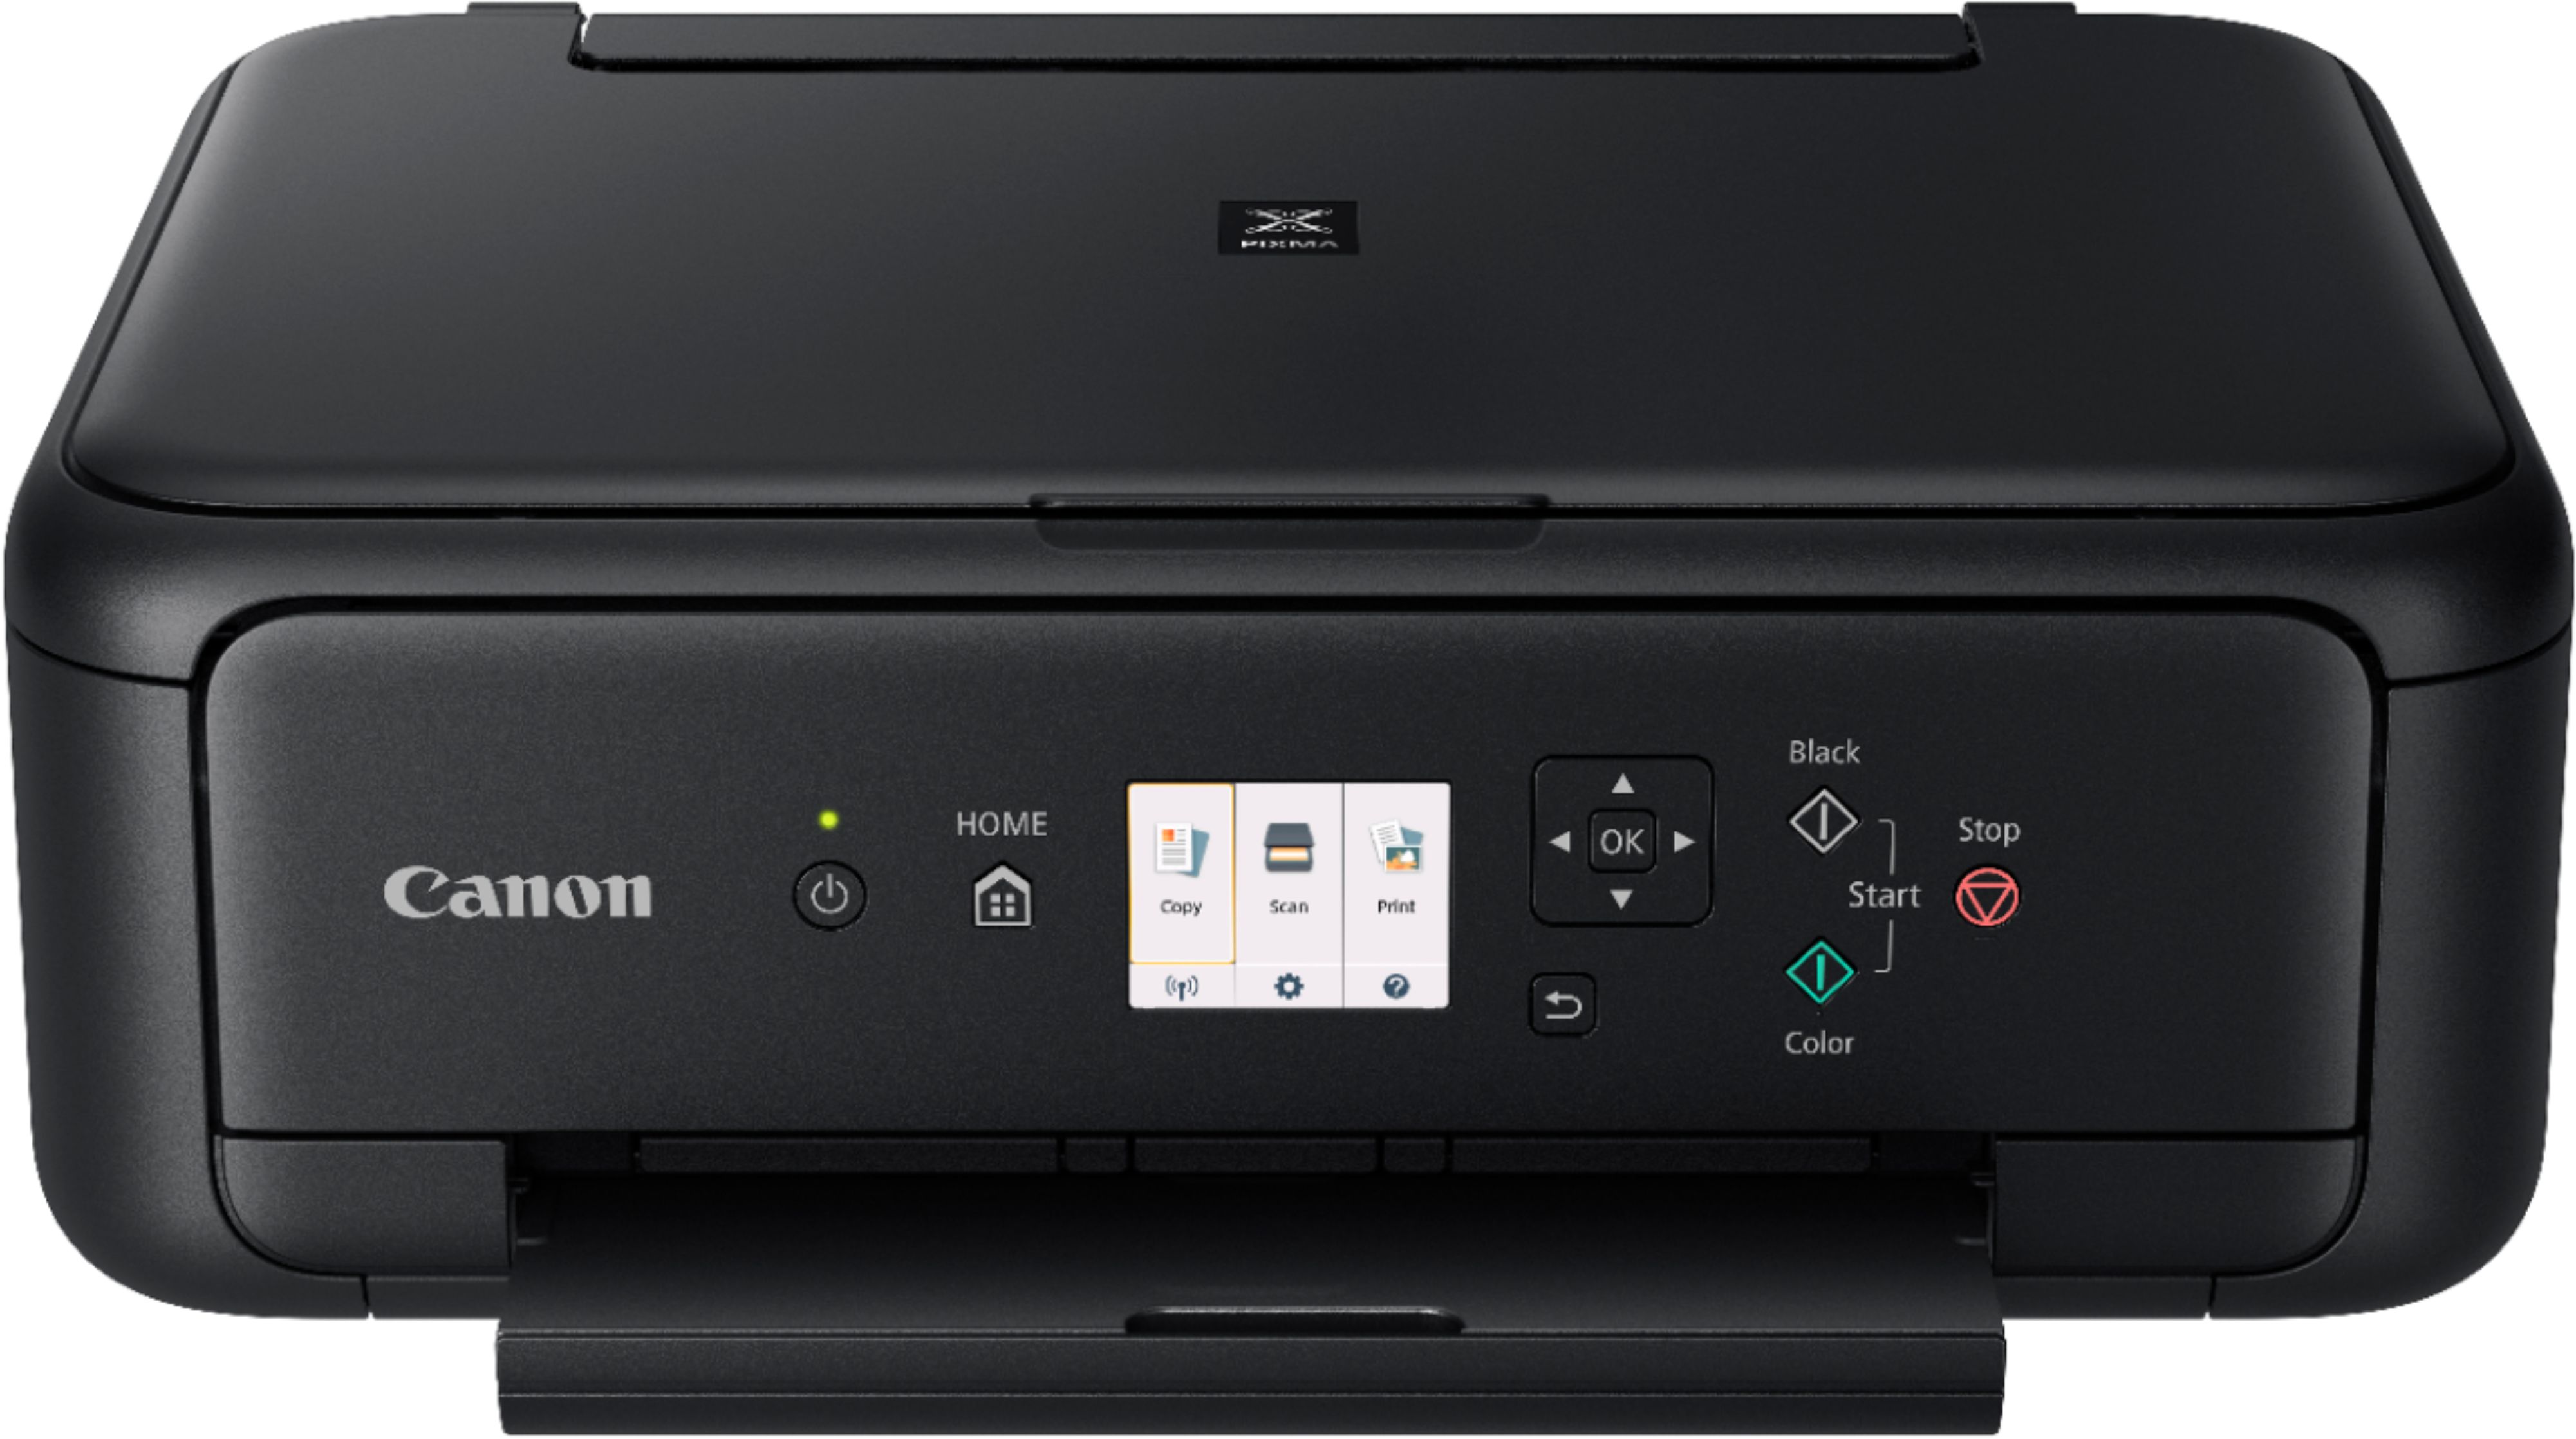 Multifunction Printer Canon Pixma TS5150 13 ipm WiFi Black